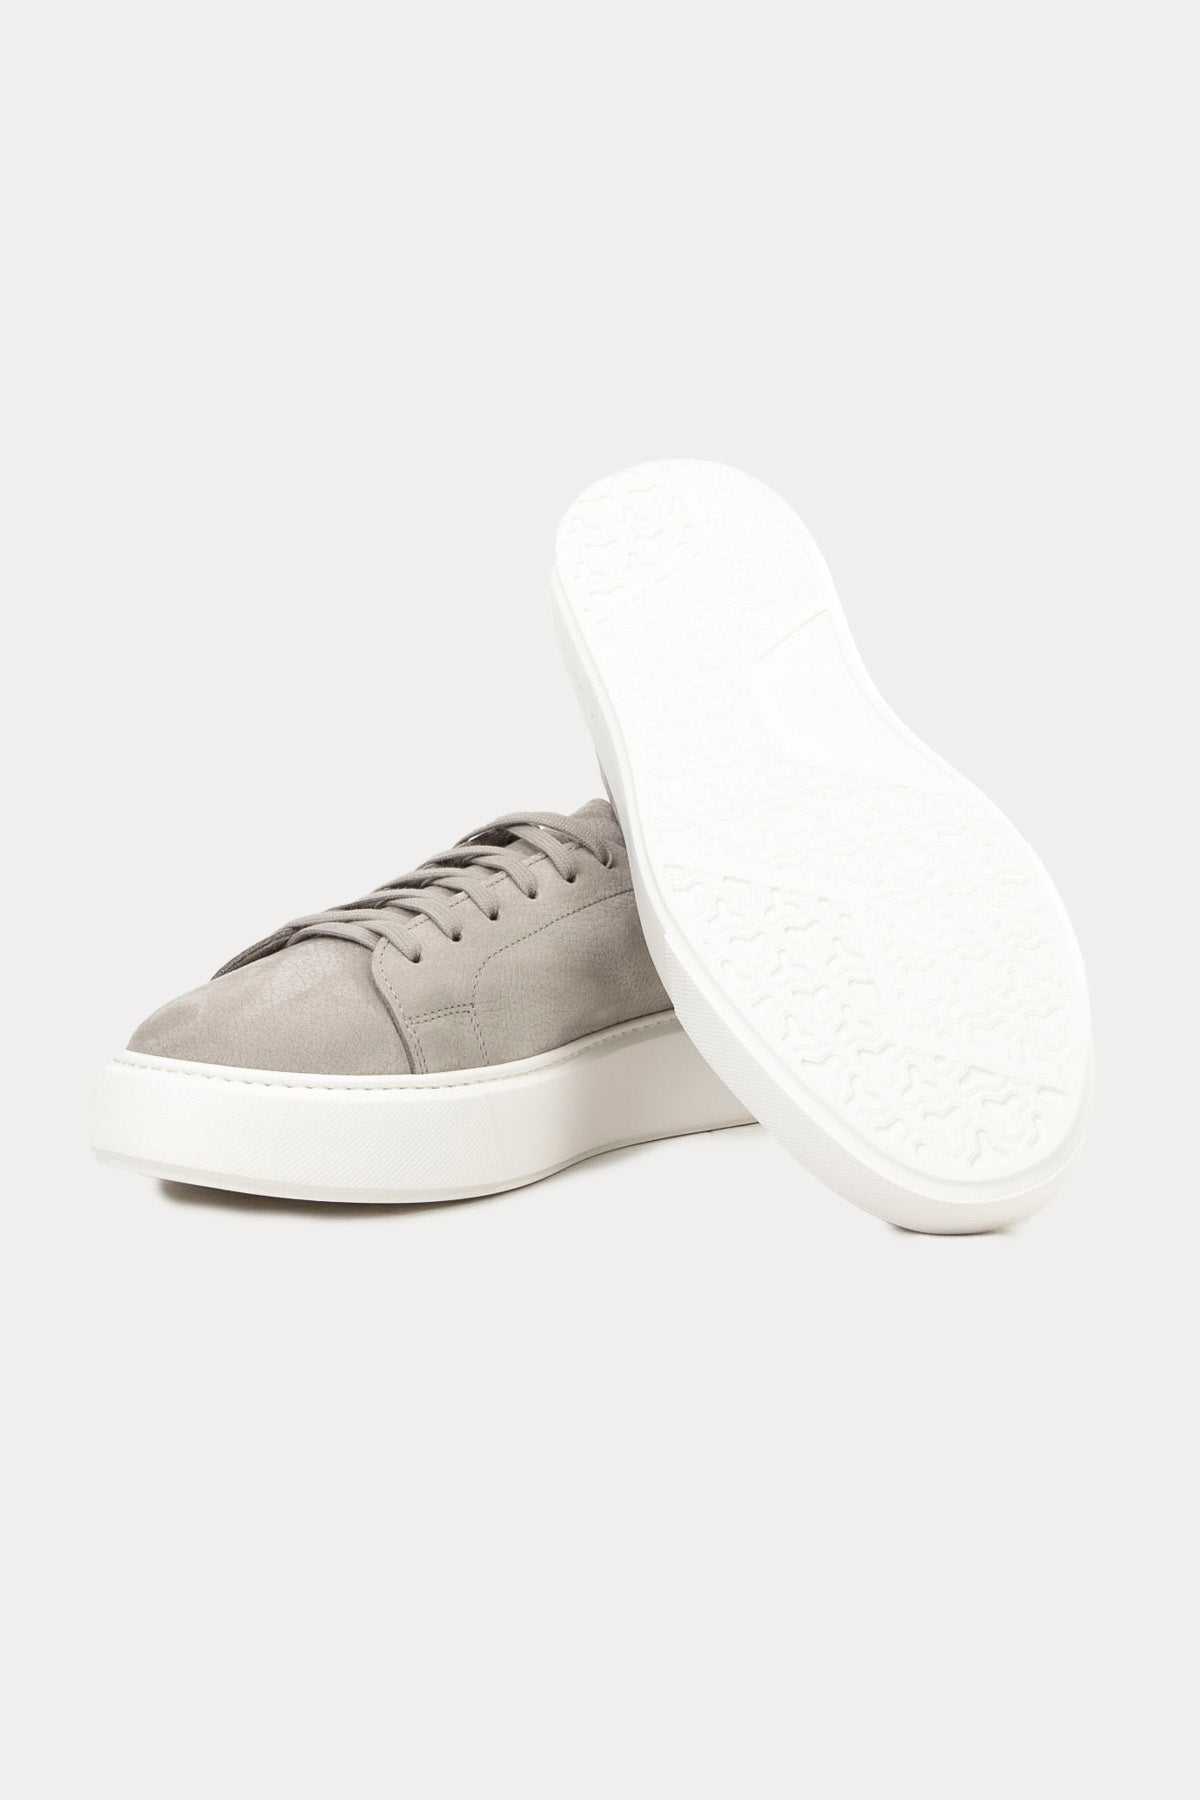 Henderson Chronos Extralight Süet Sneaker Ayakkabı